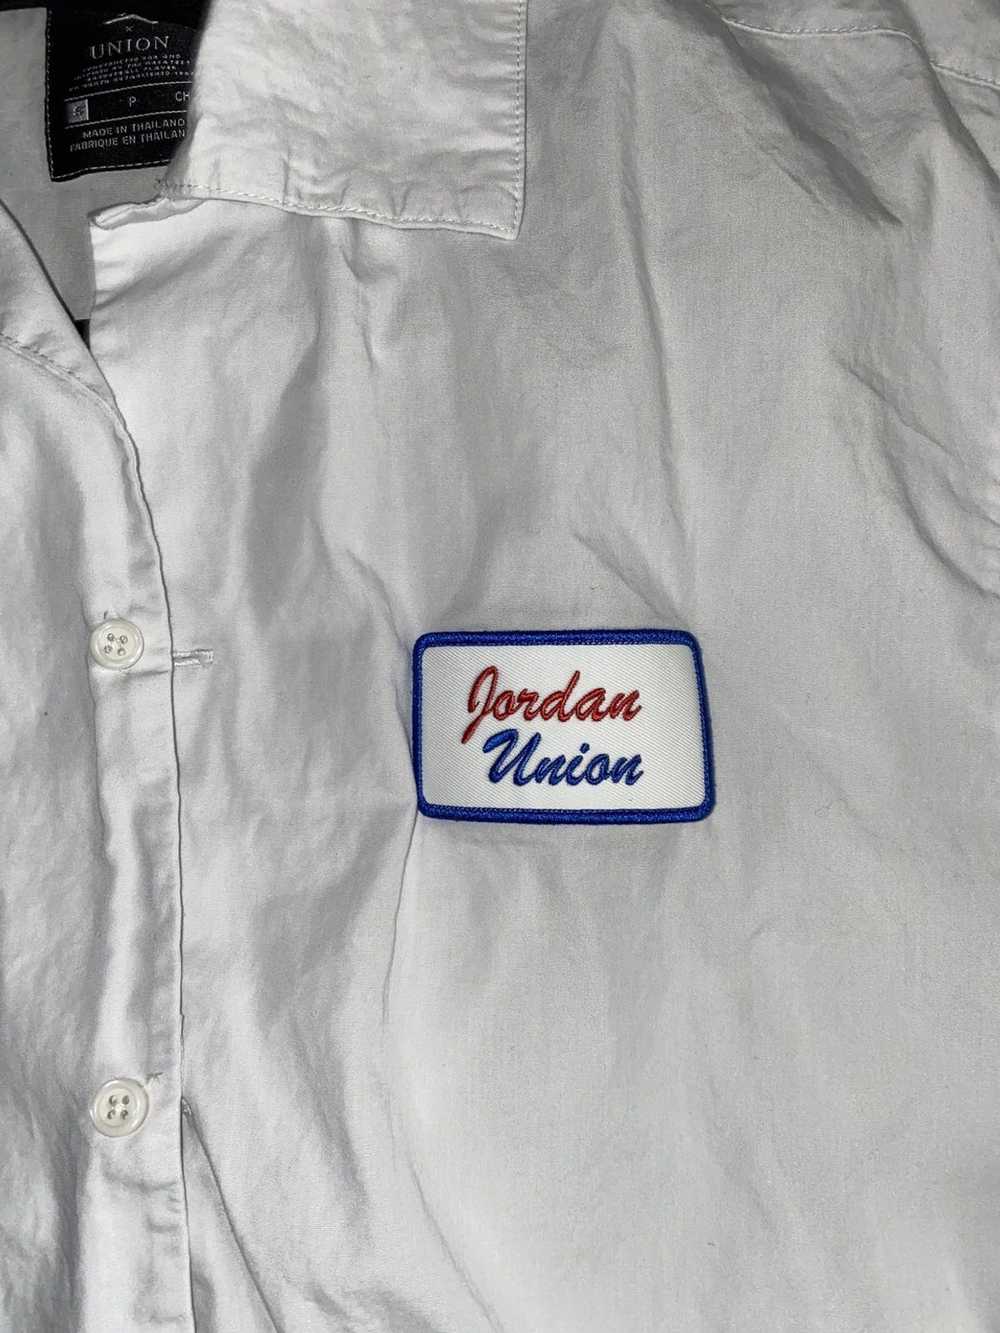 Jordan Brand Jordan Union Mechanic Shirt - image 3